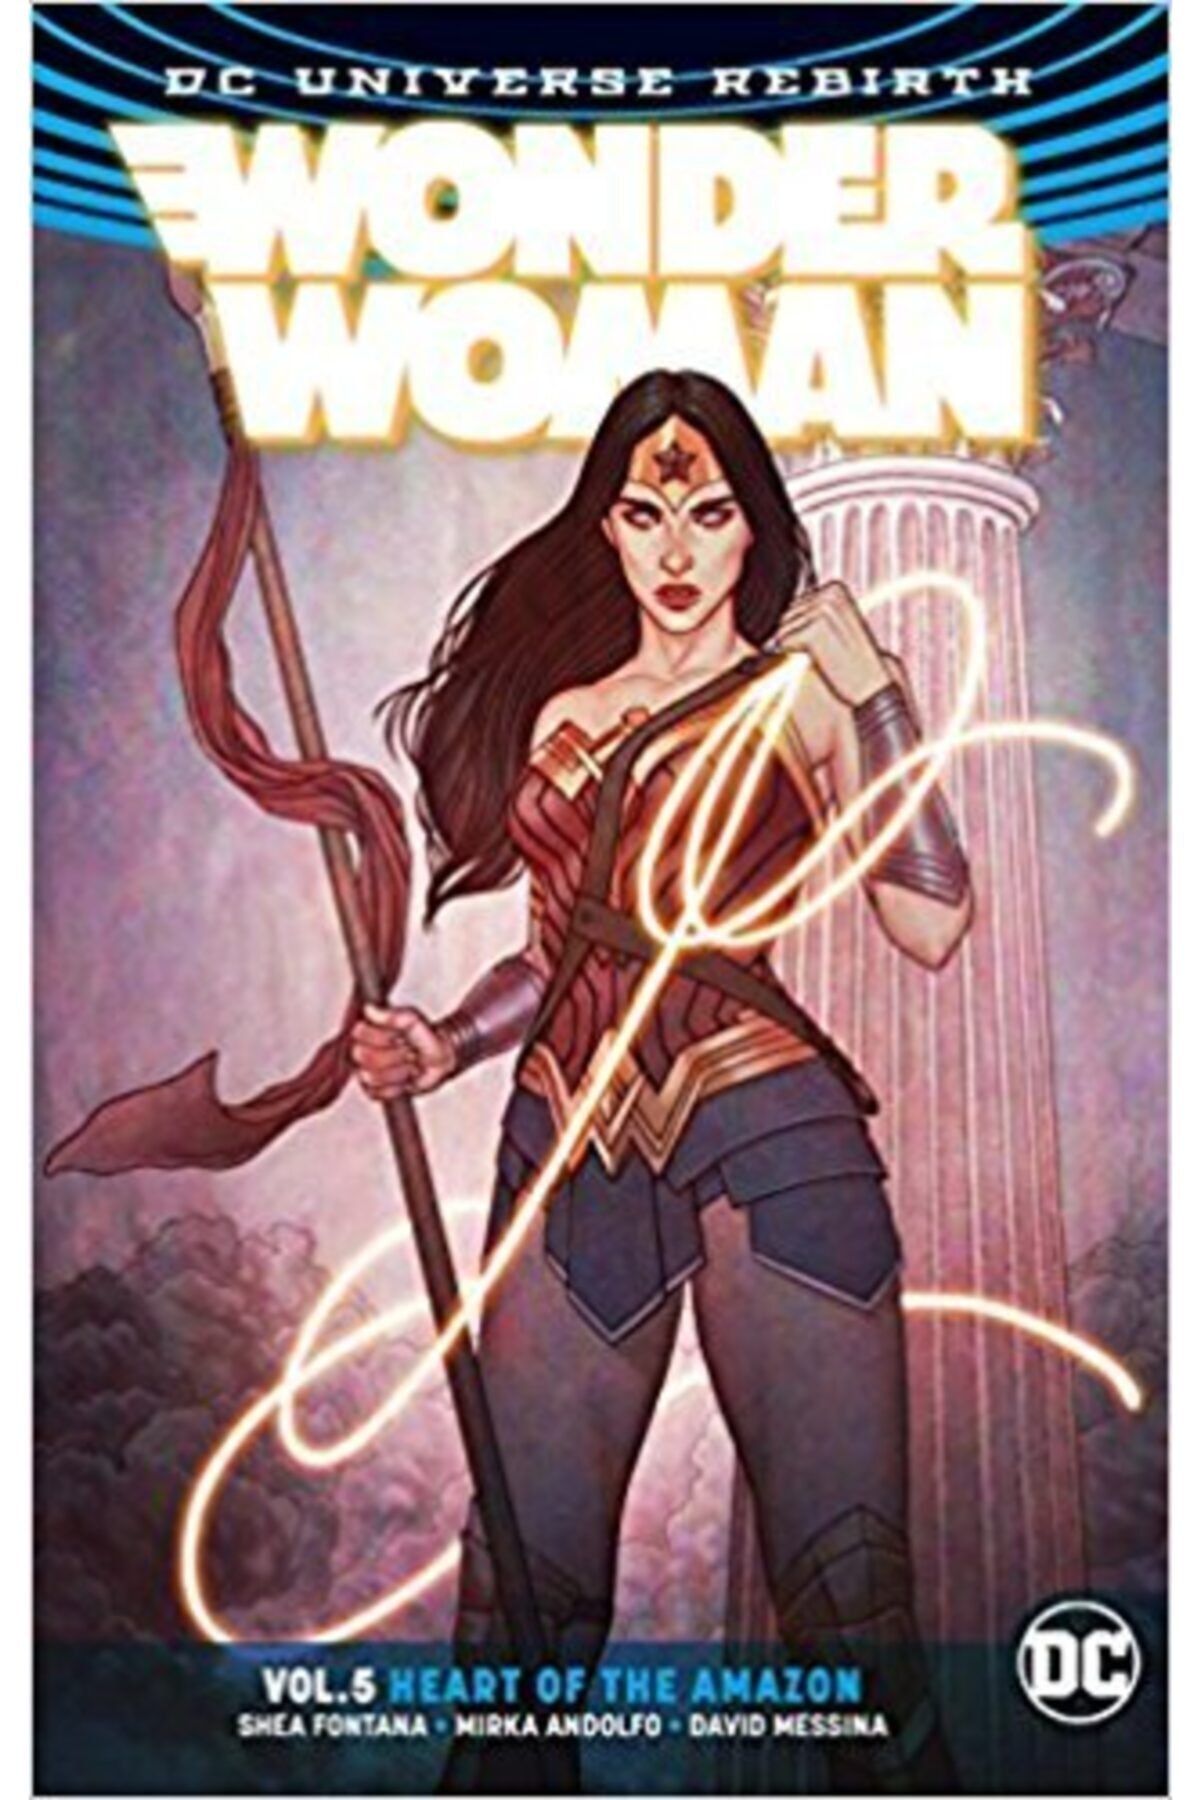 TM & DC Comics-Warner Bros Wonder Woman Vol. 5: Heart Of The Amazon